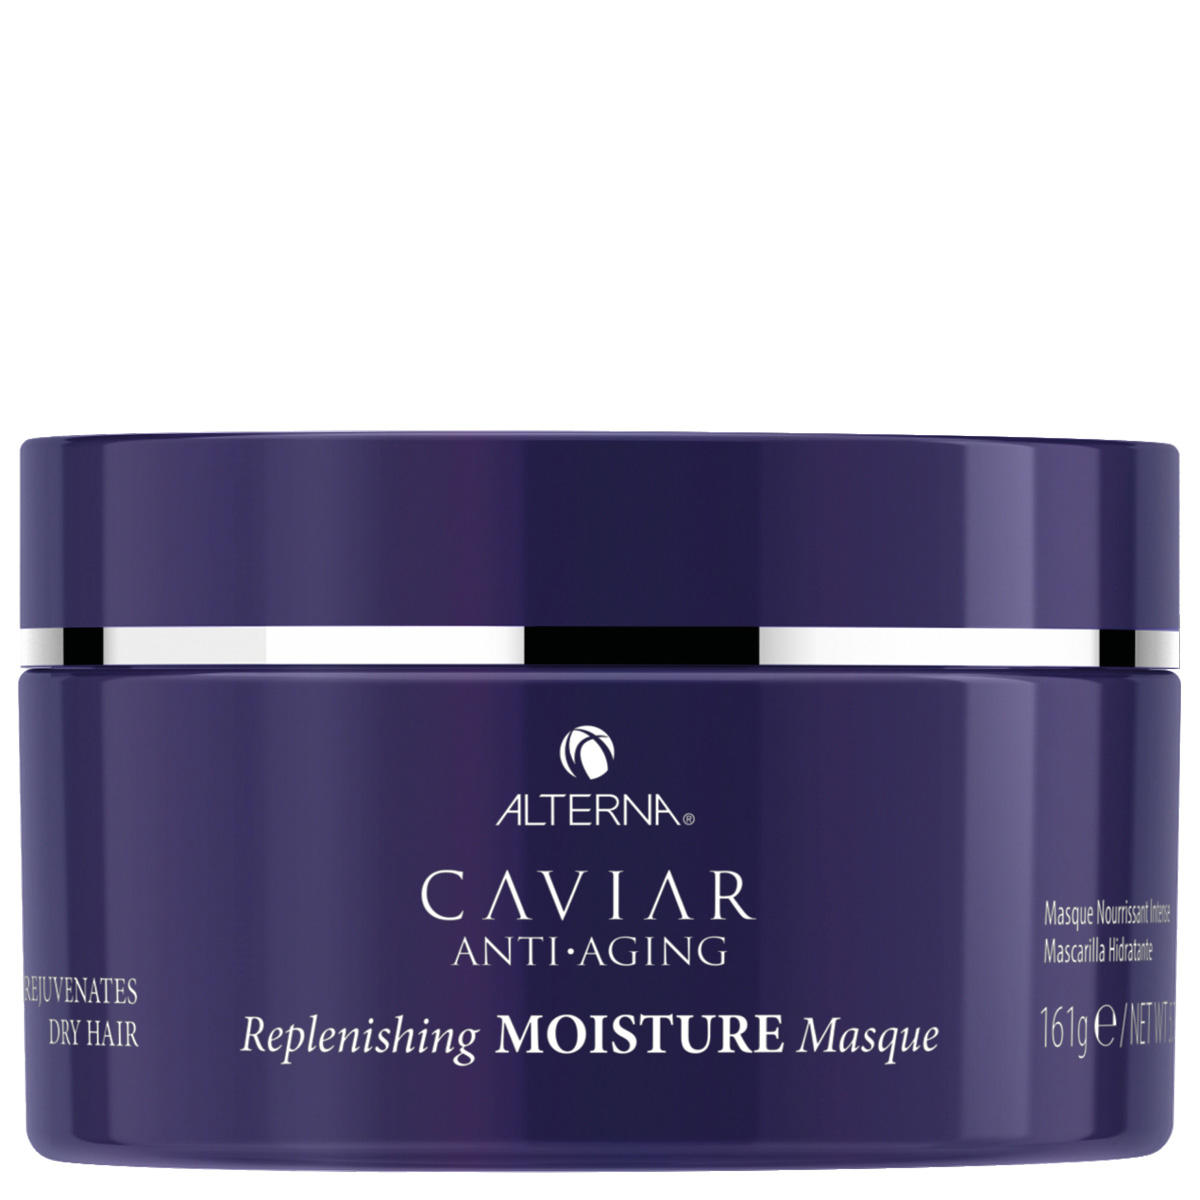 Alterna Caviar Anti-Aging Replenishing Moisture Masque 161 g - 1